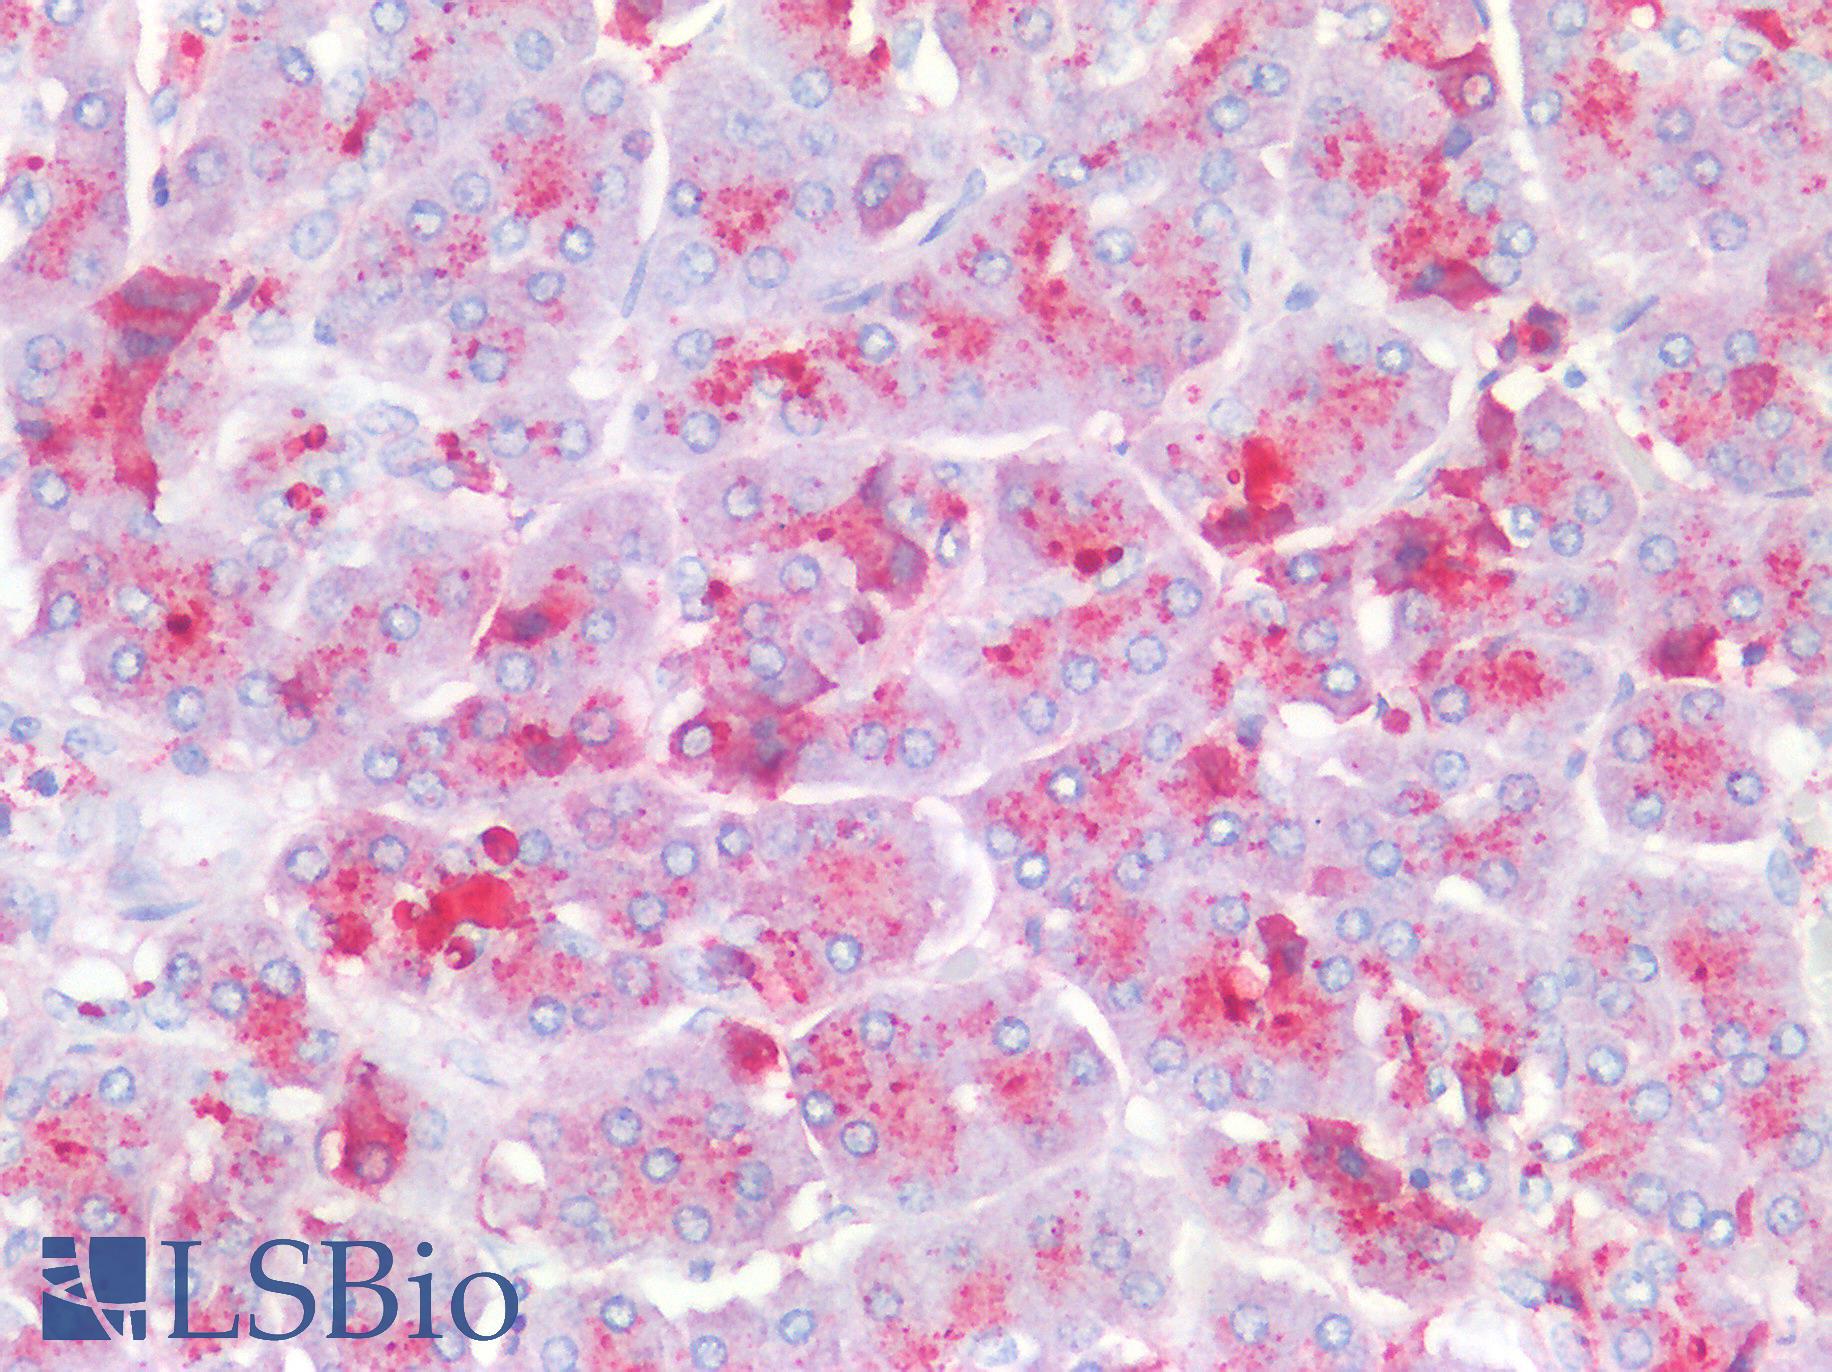 PRSS1 / Trypsin Antibody - Human Pancreas: Formalin-Fixed, Paraffin-Embedded (FFPE)